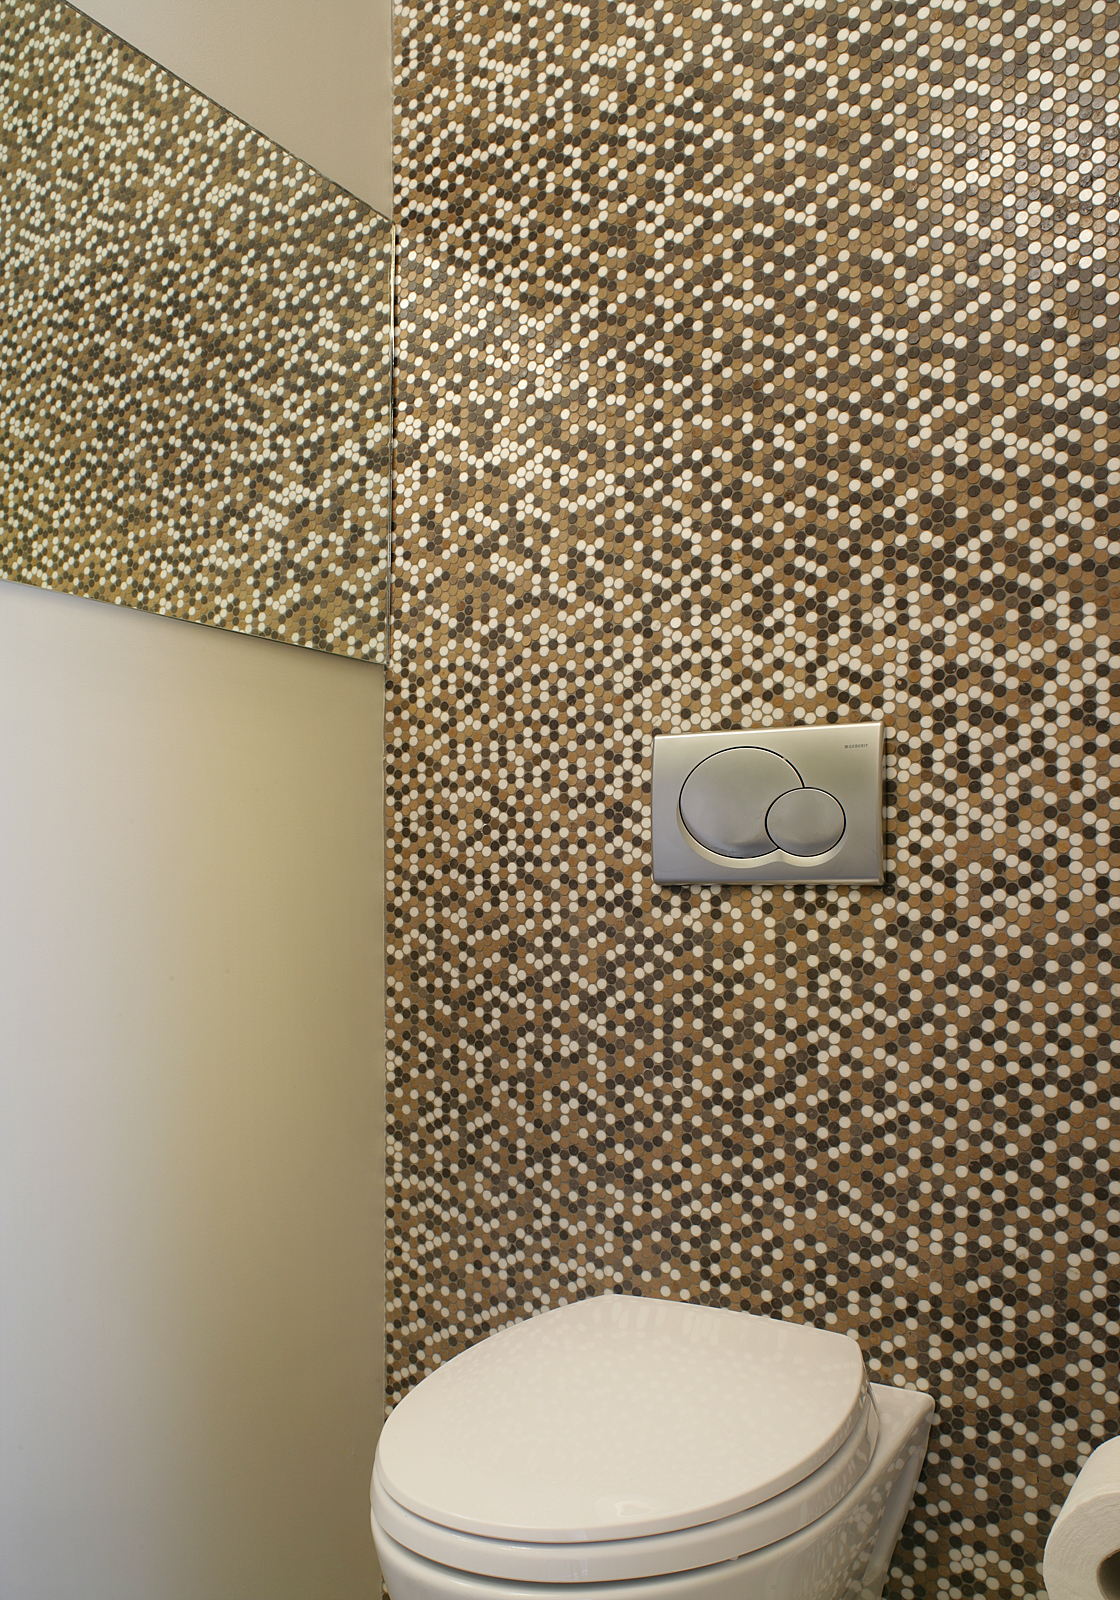 mosaic bathroom tiles